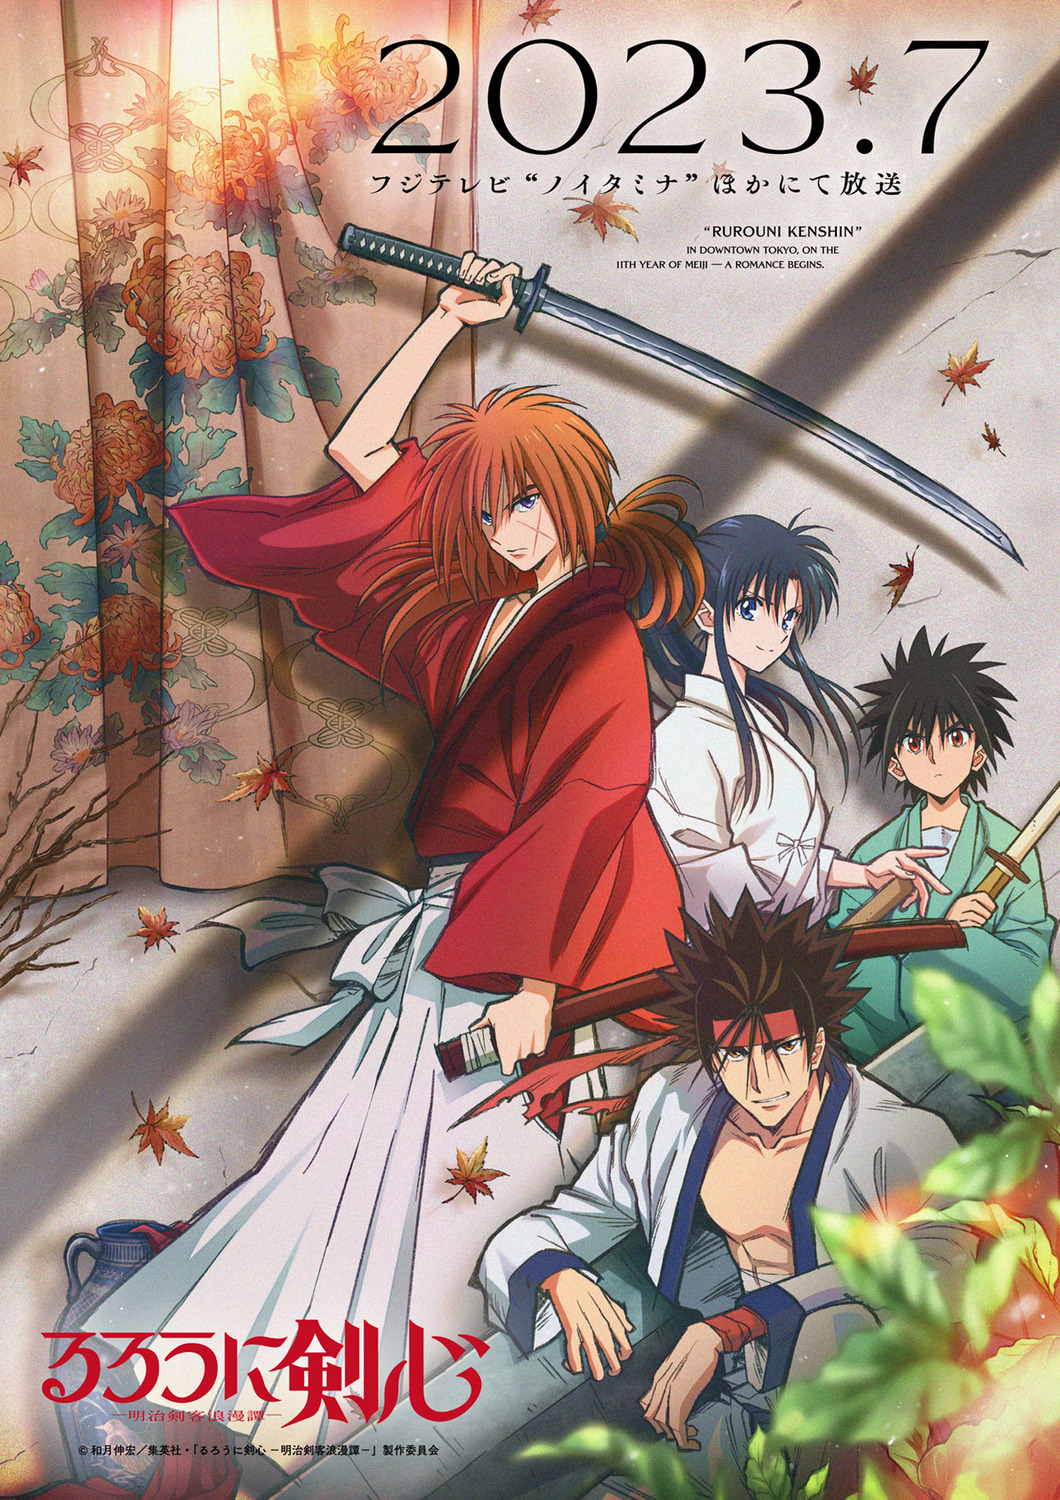 Extra Large TV Poster Image for Rurouni Kenshin: Meiji Kenkaku Romantan 